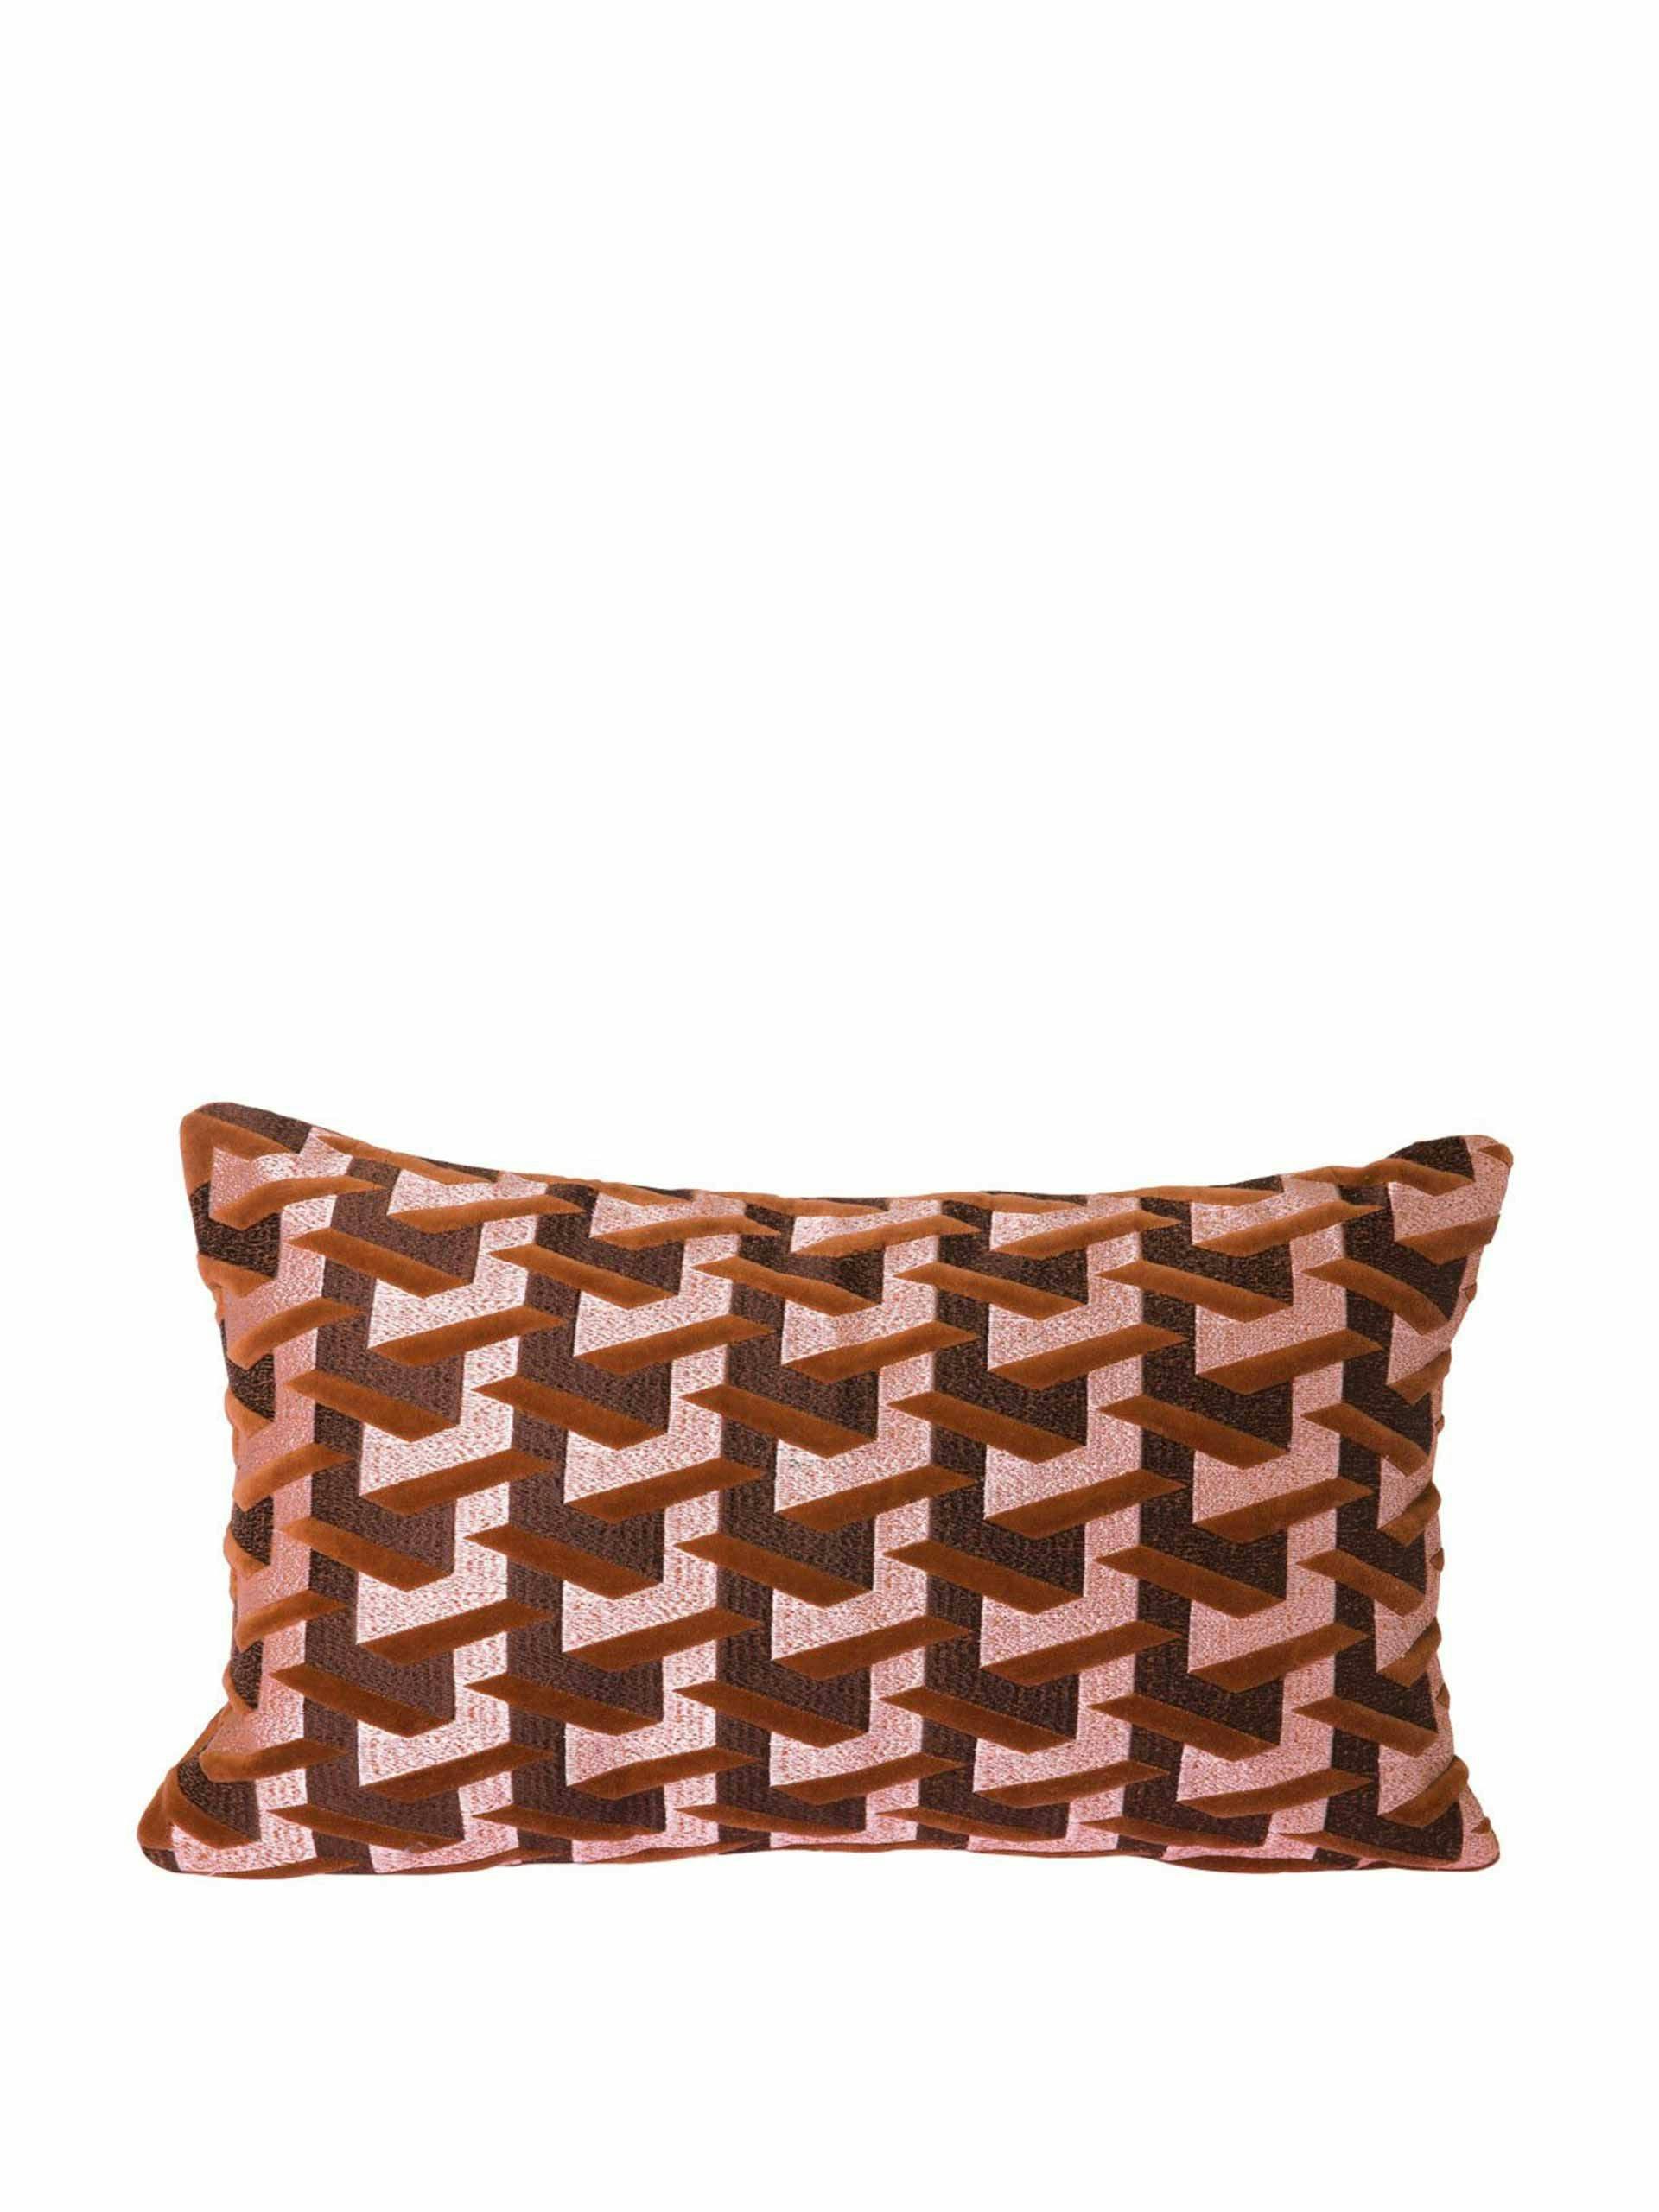 Geometric patterned cushion